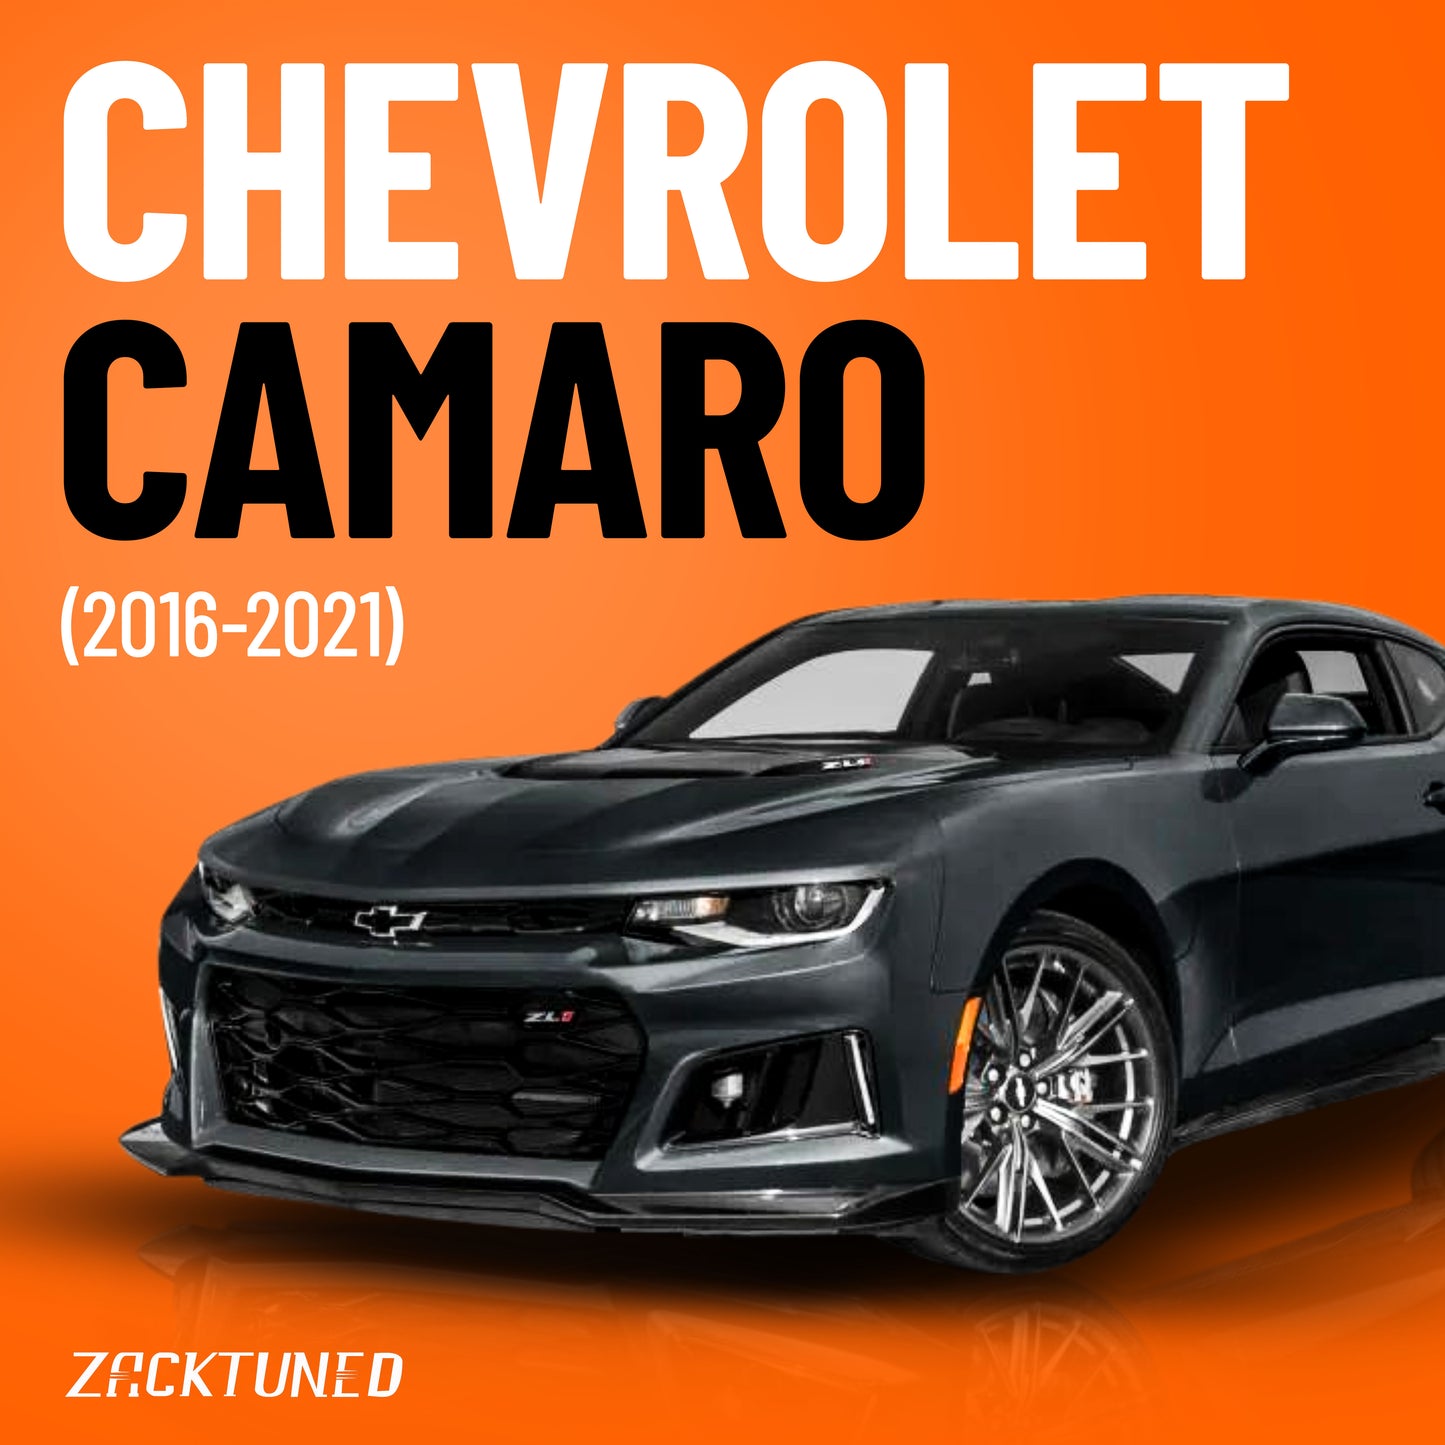 Chevrolet Camaro (2016-2021)